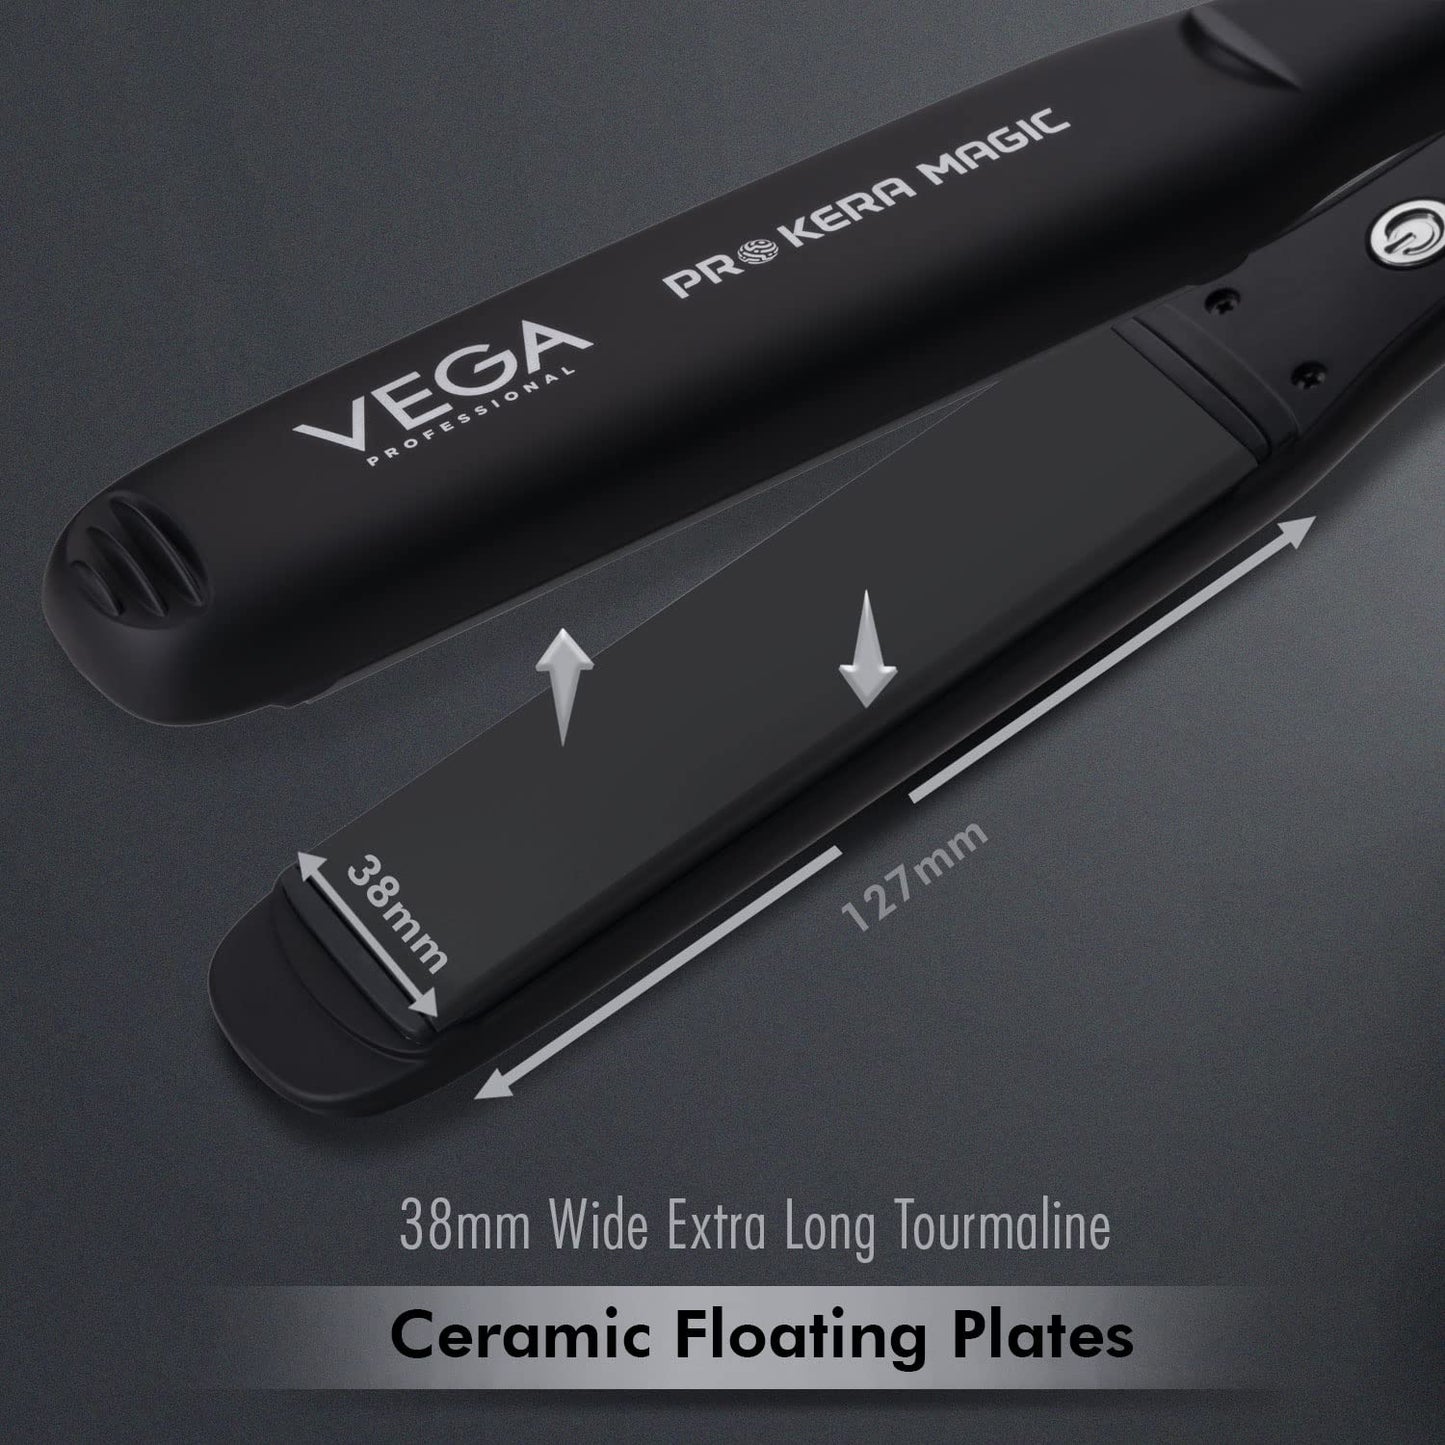 VEGA PROFESSIONAL Pro Kera Magic Hair Straightener With Extra Long Tourmaline Ceramic Floating Plates, 30 Secs Ultra Fast Heat Up & Adjustable Temperature, (Vpphs-04), Black